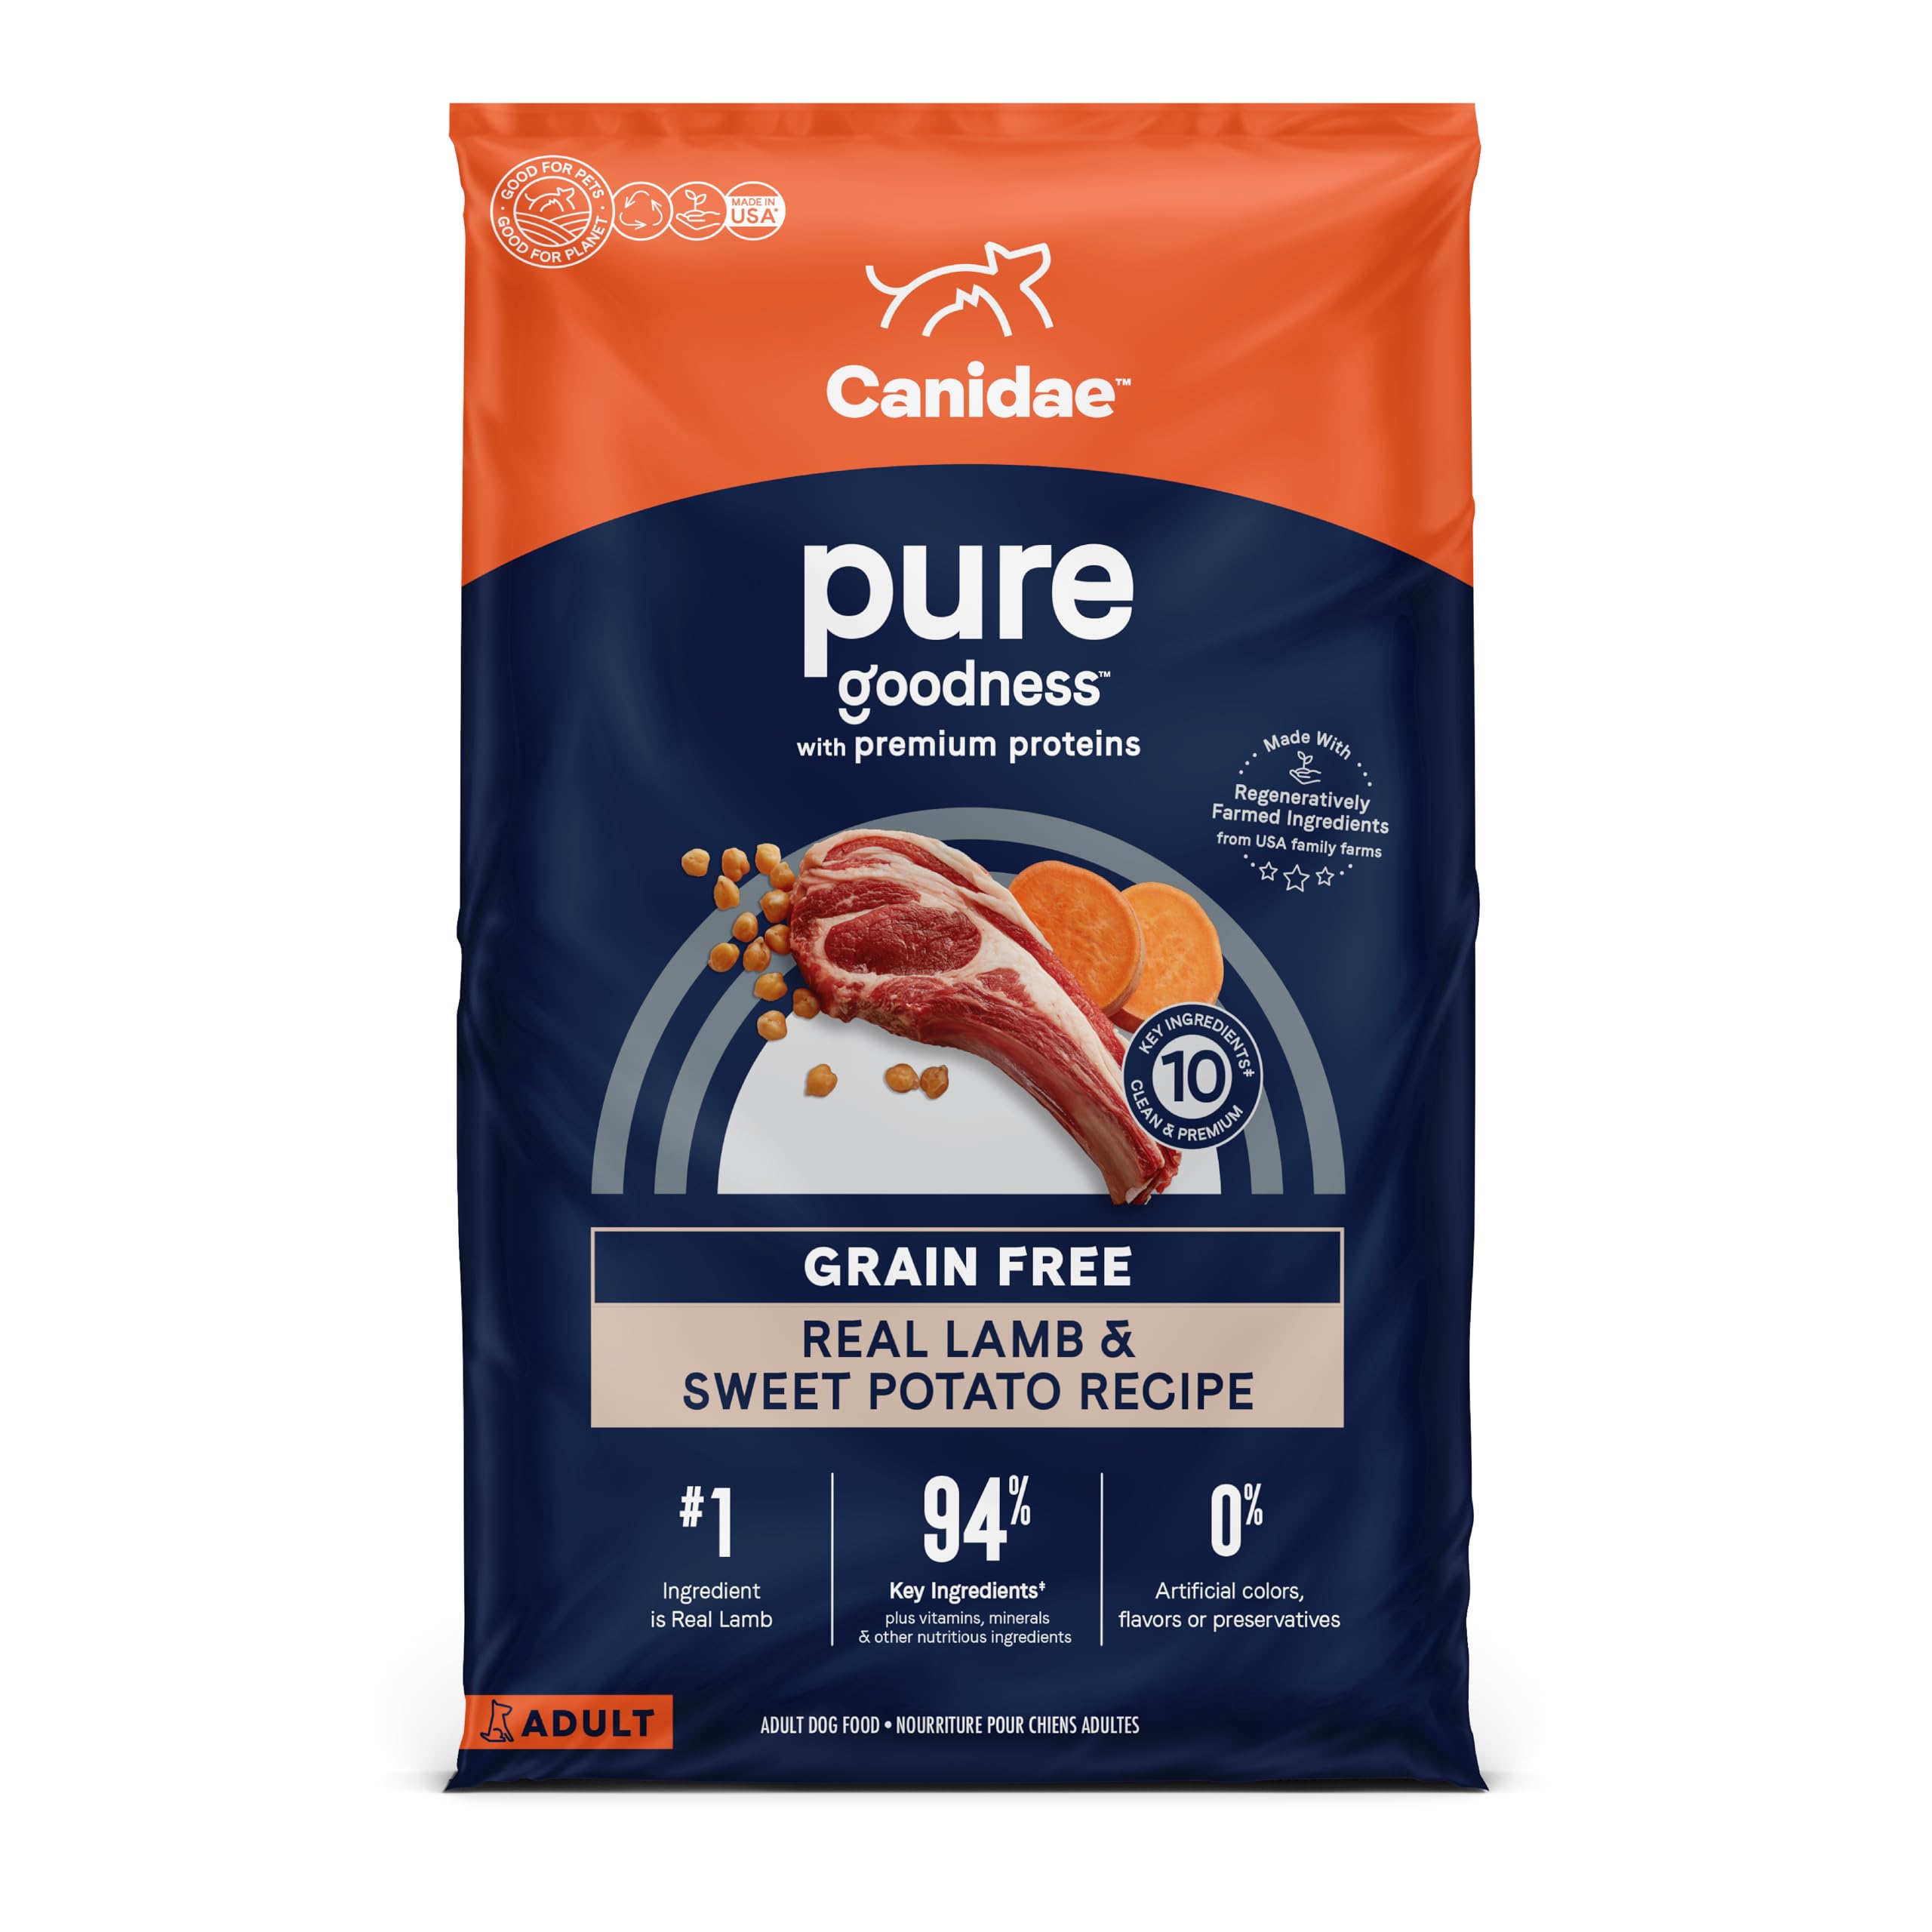 Canidae Pure 有限成分优质成人干狗粮，真正的羊肉和甘薯配方，22 磅，无谷物